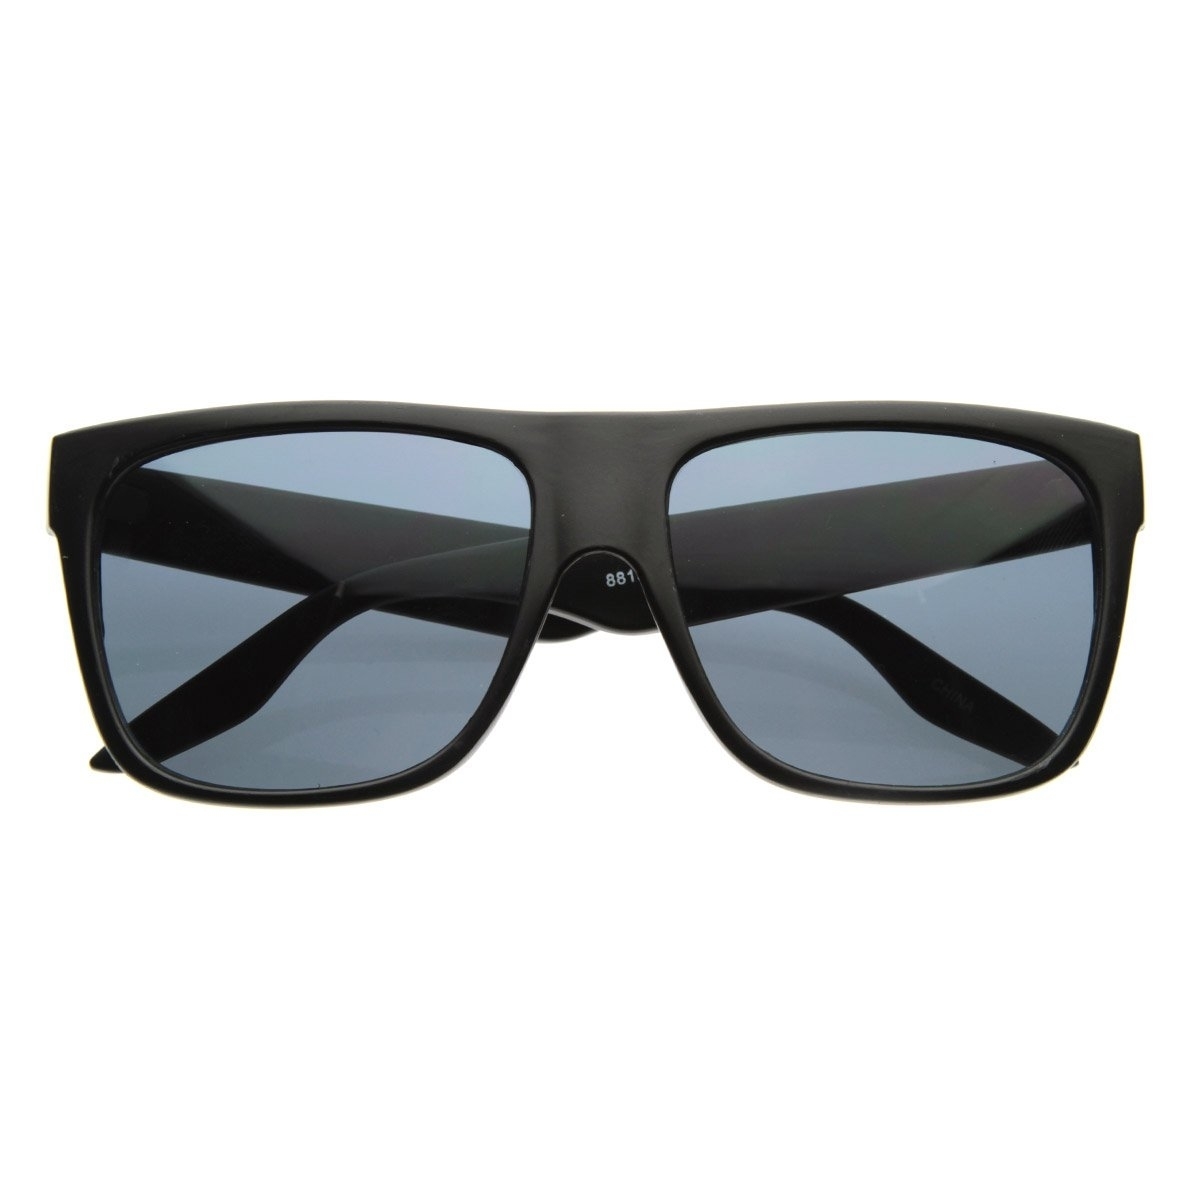 Casual Shades Menswear Plastic Flat Top Horn Rimmed Style Sunglasses Eyewear - Matte Black